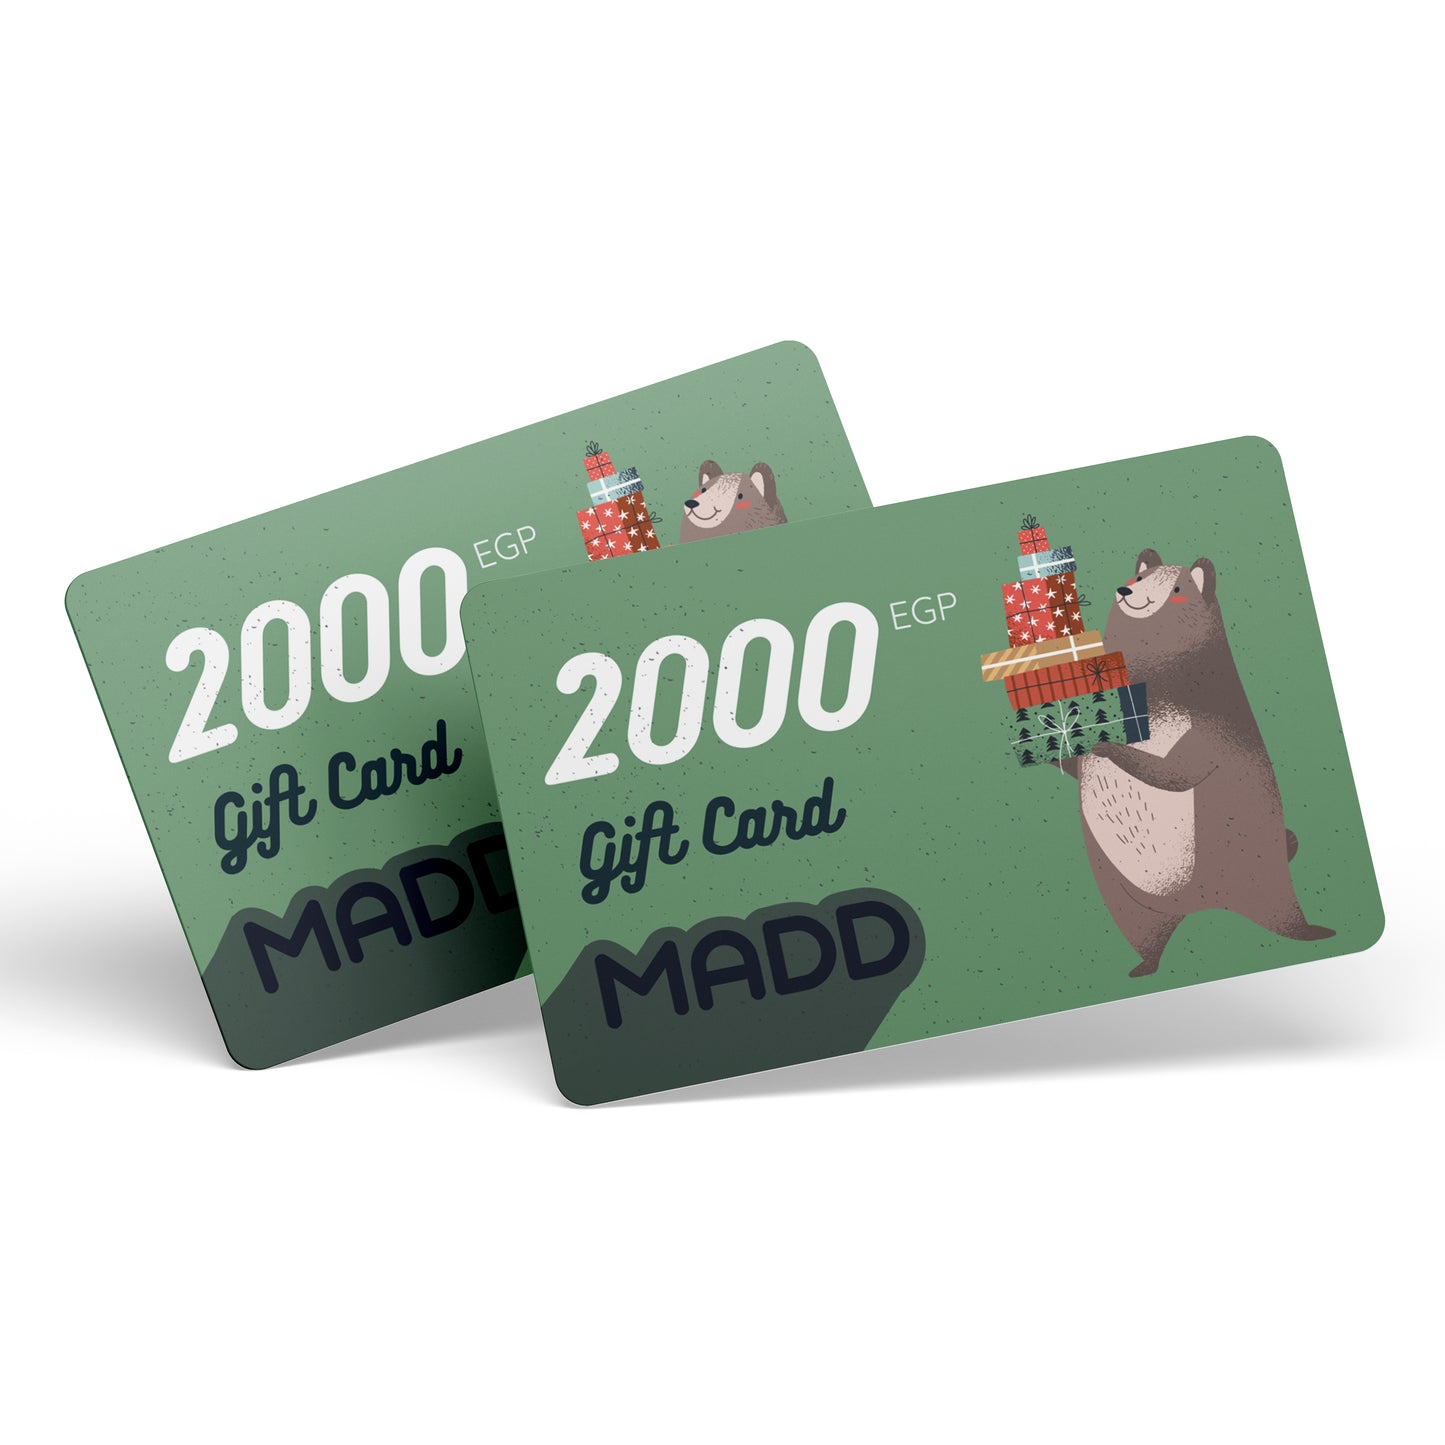 MADD gift card